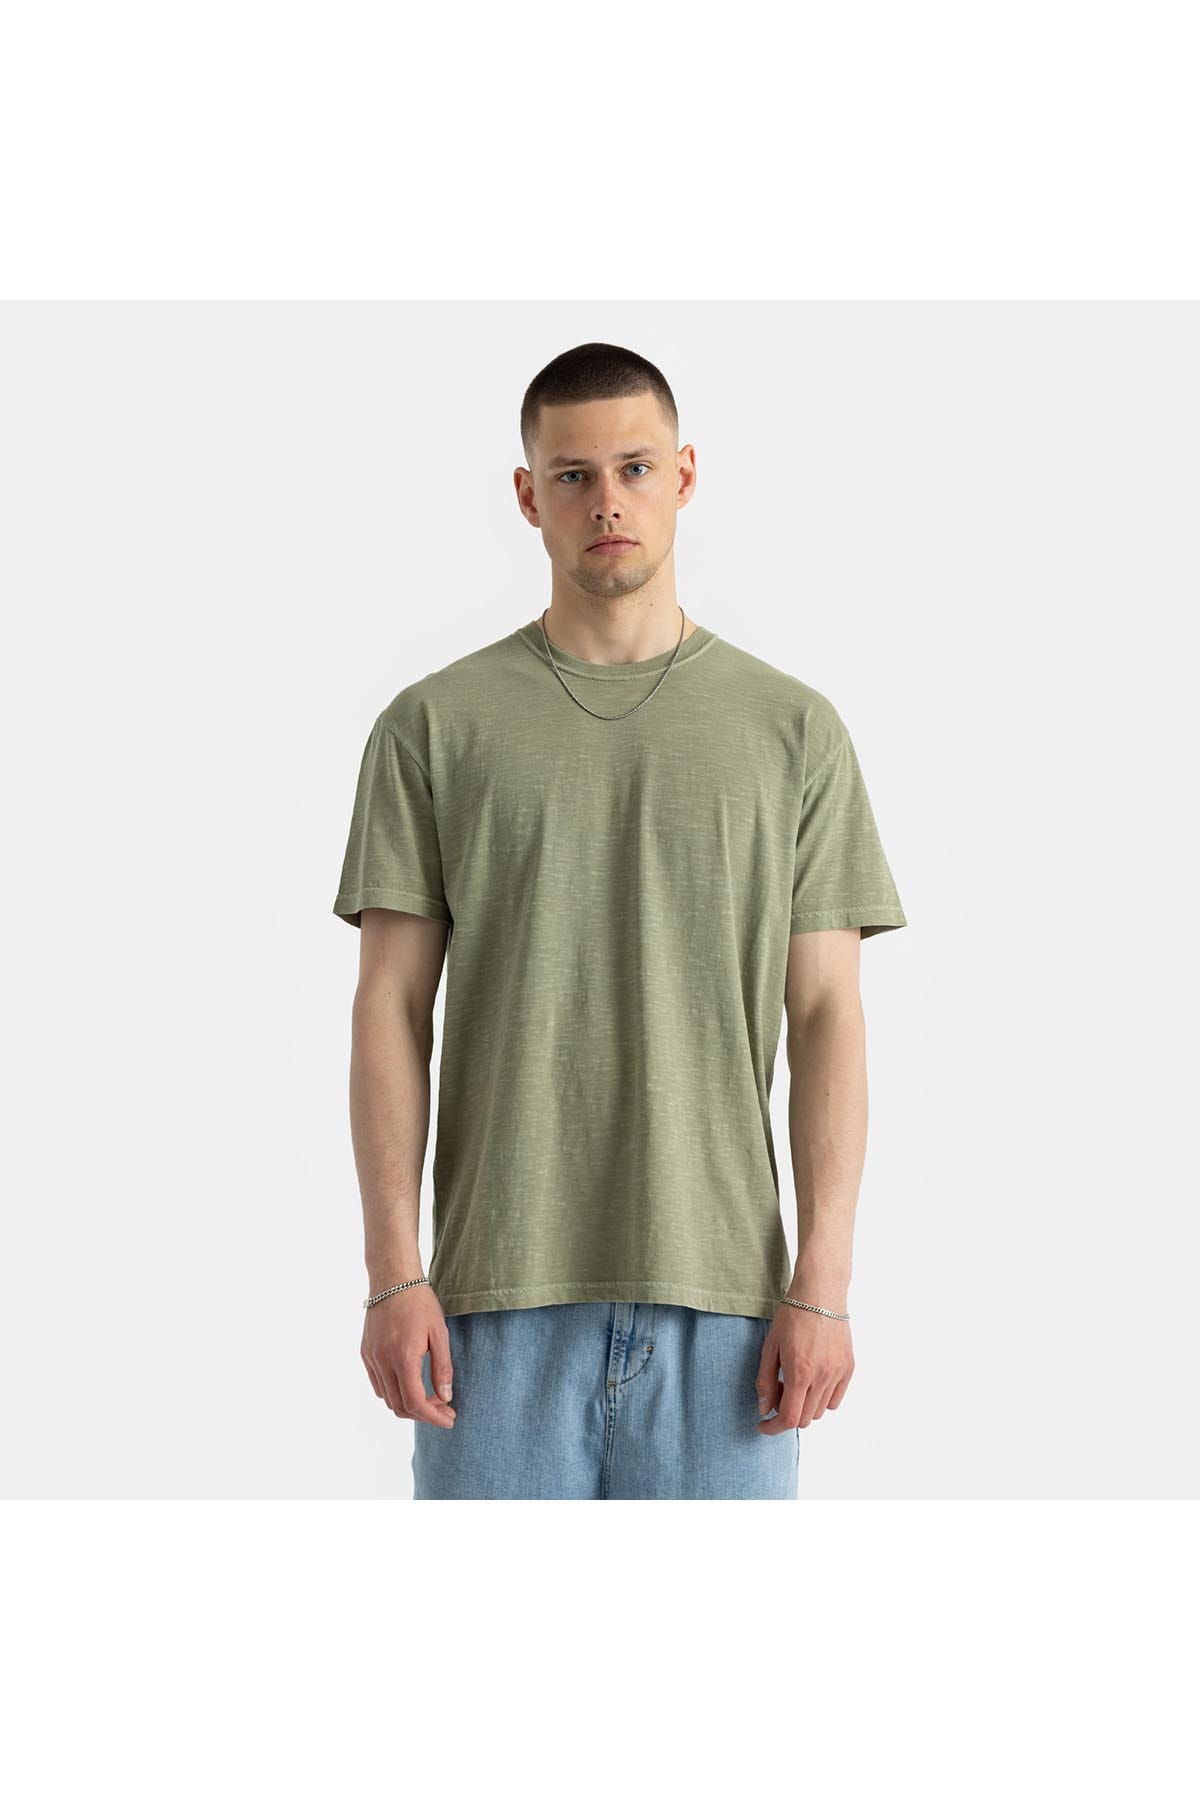 T-Shirt Lockeres, grünes T-Shirt Lightgreen T-Shirt RVLT Revolution 